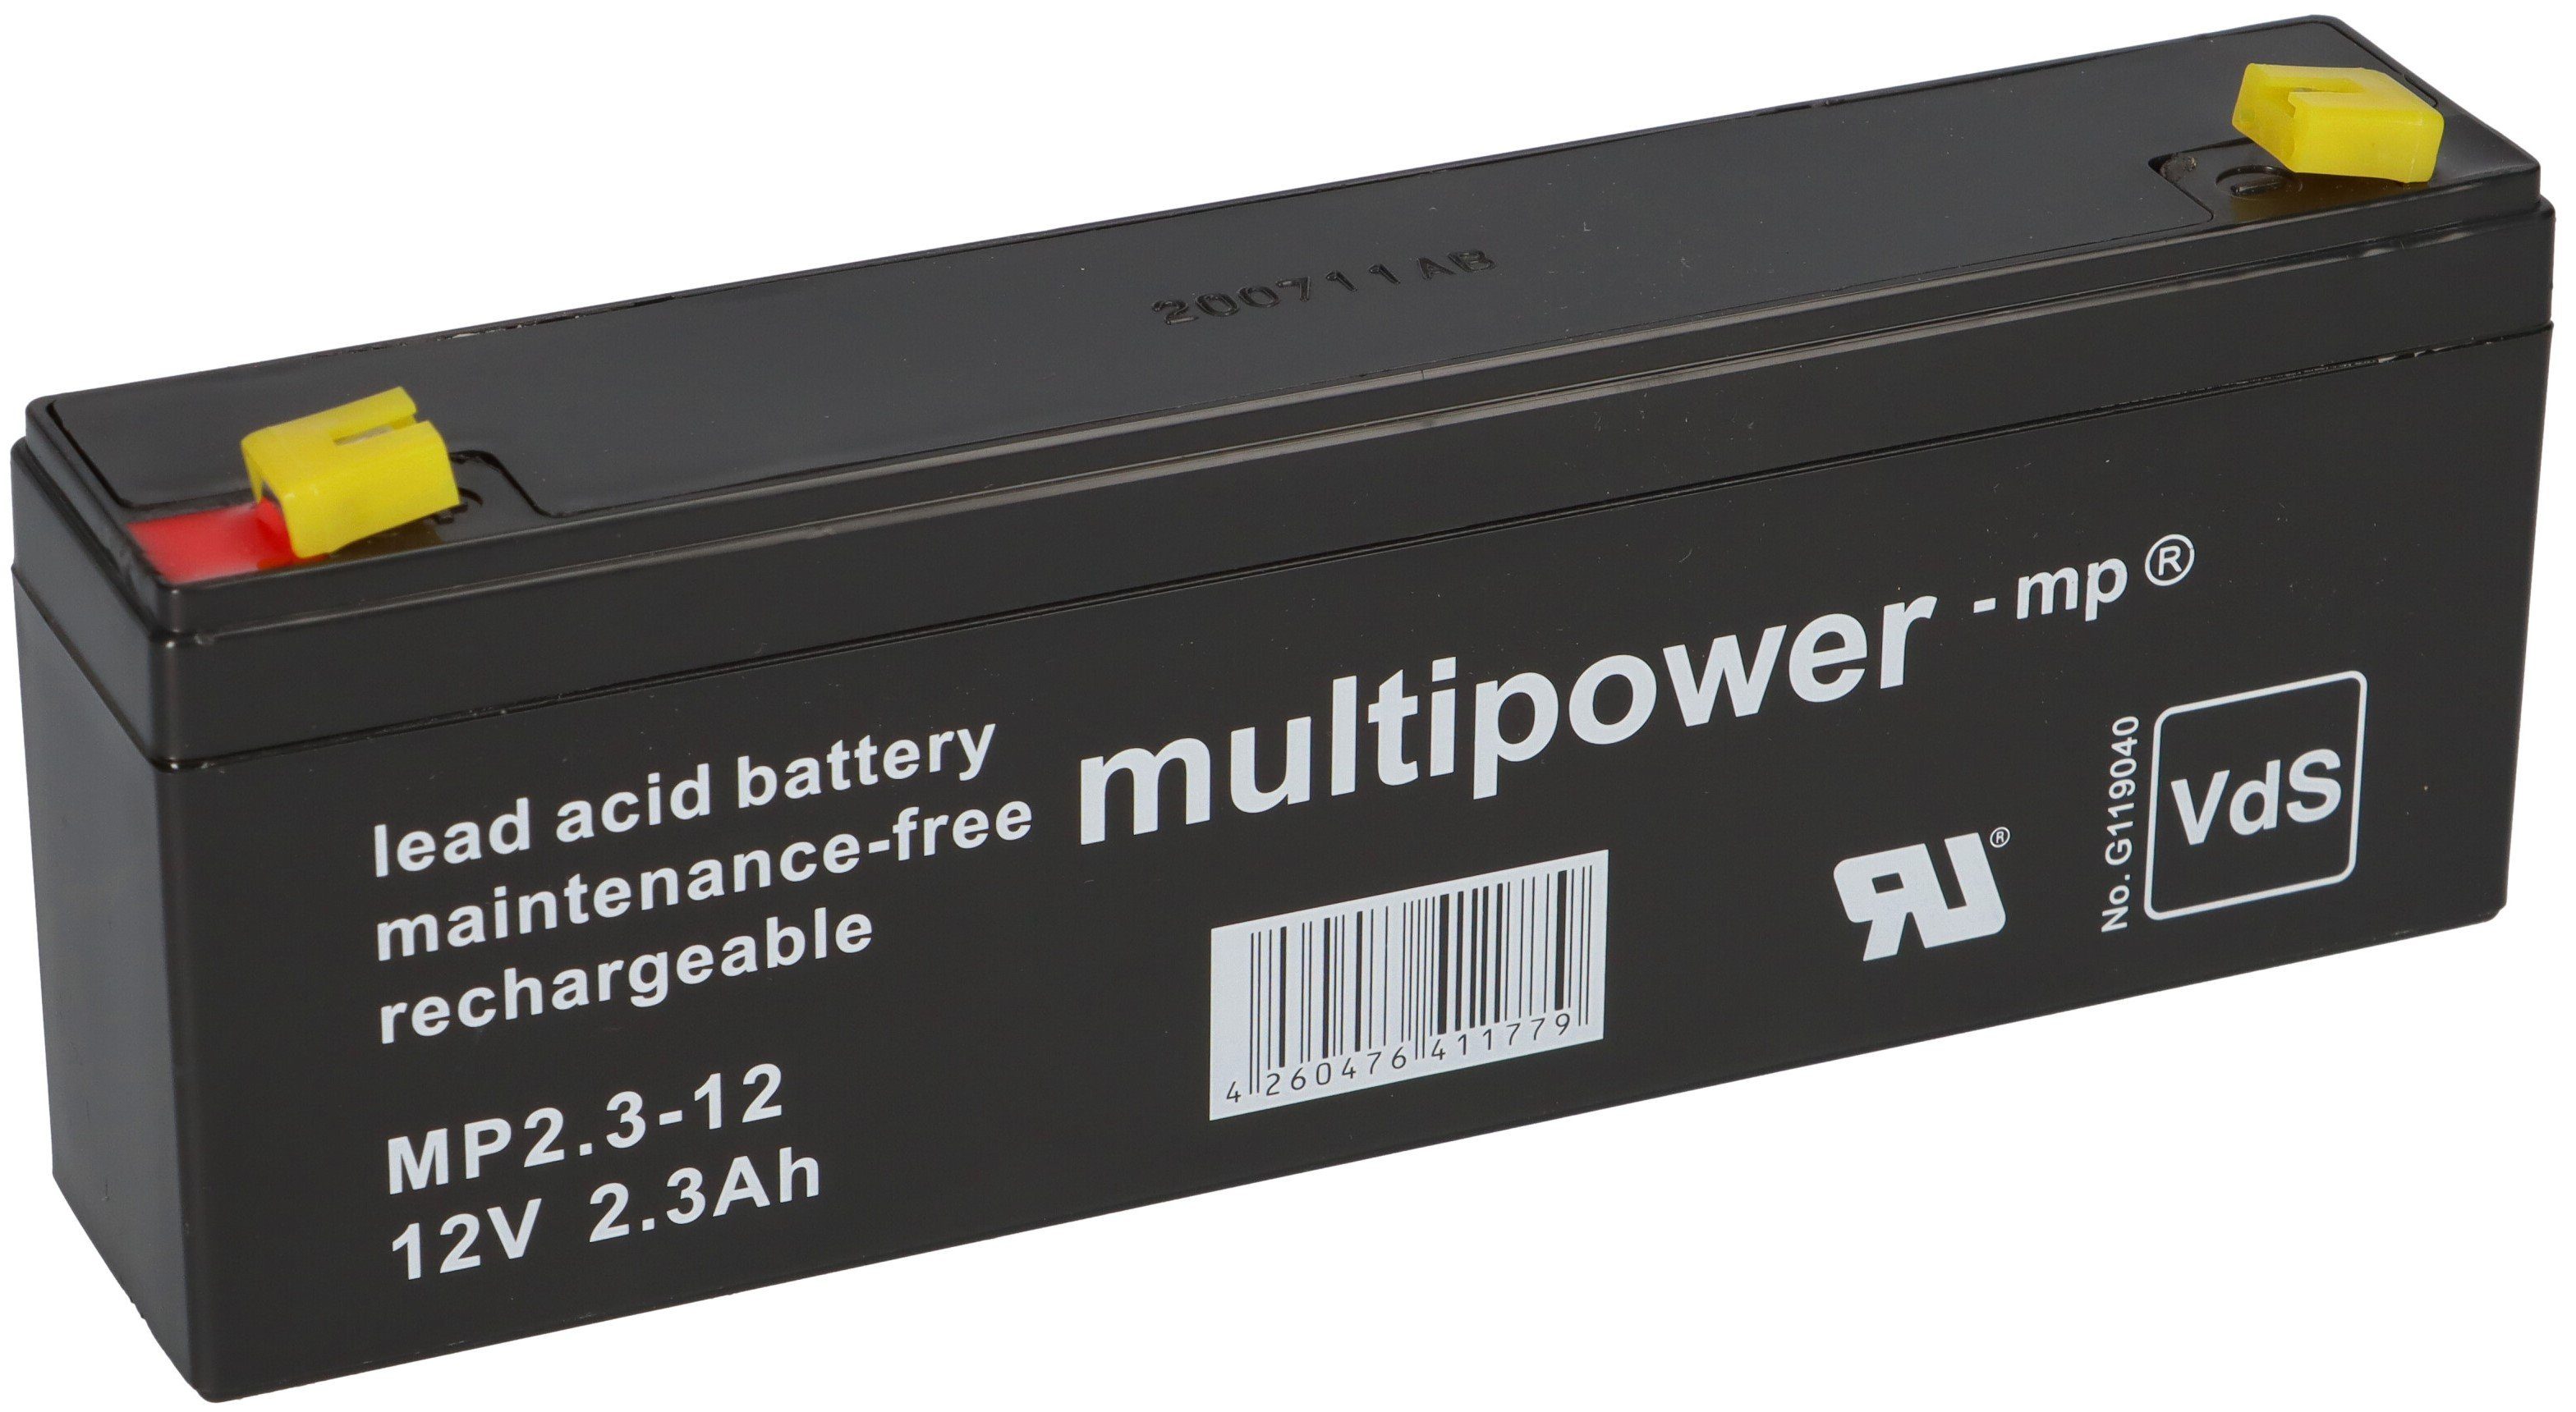 Multipower Multipower 2,3Ah VdS G107033, MP2,3-12 1x 12V Faston Blei-Akku Pb 4,8 Bleiakkus